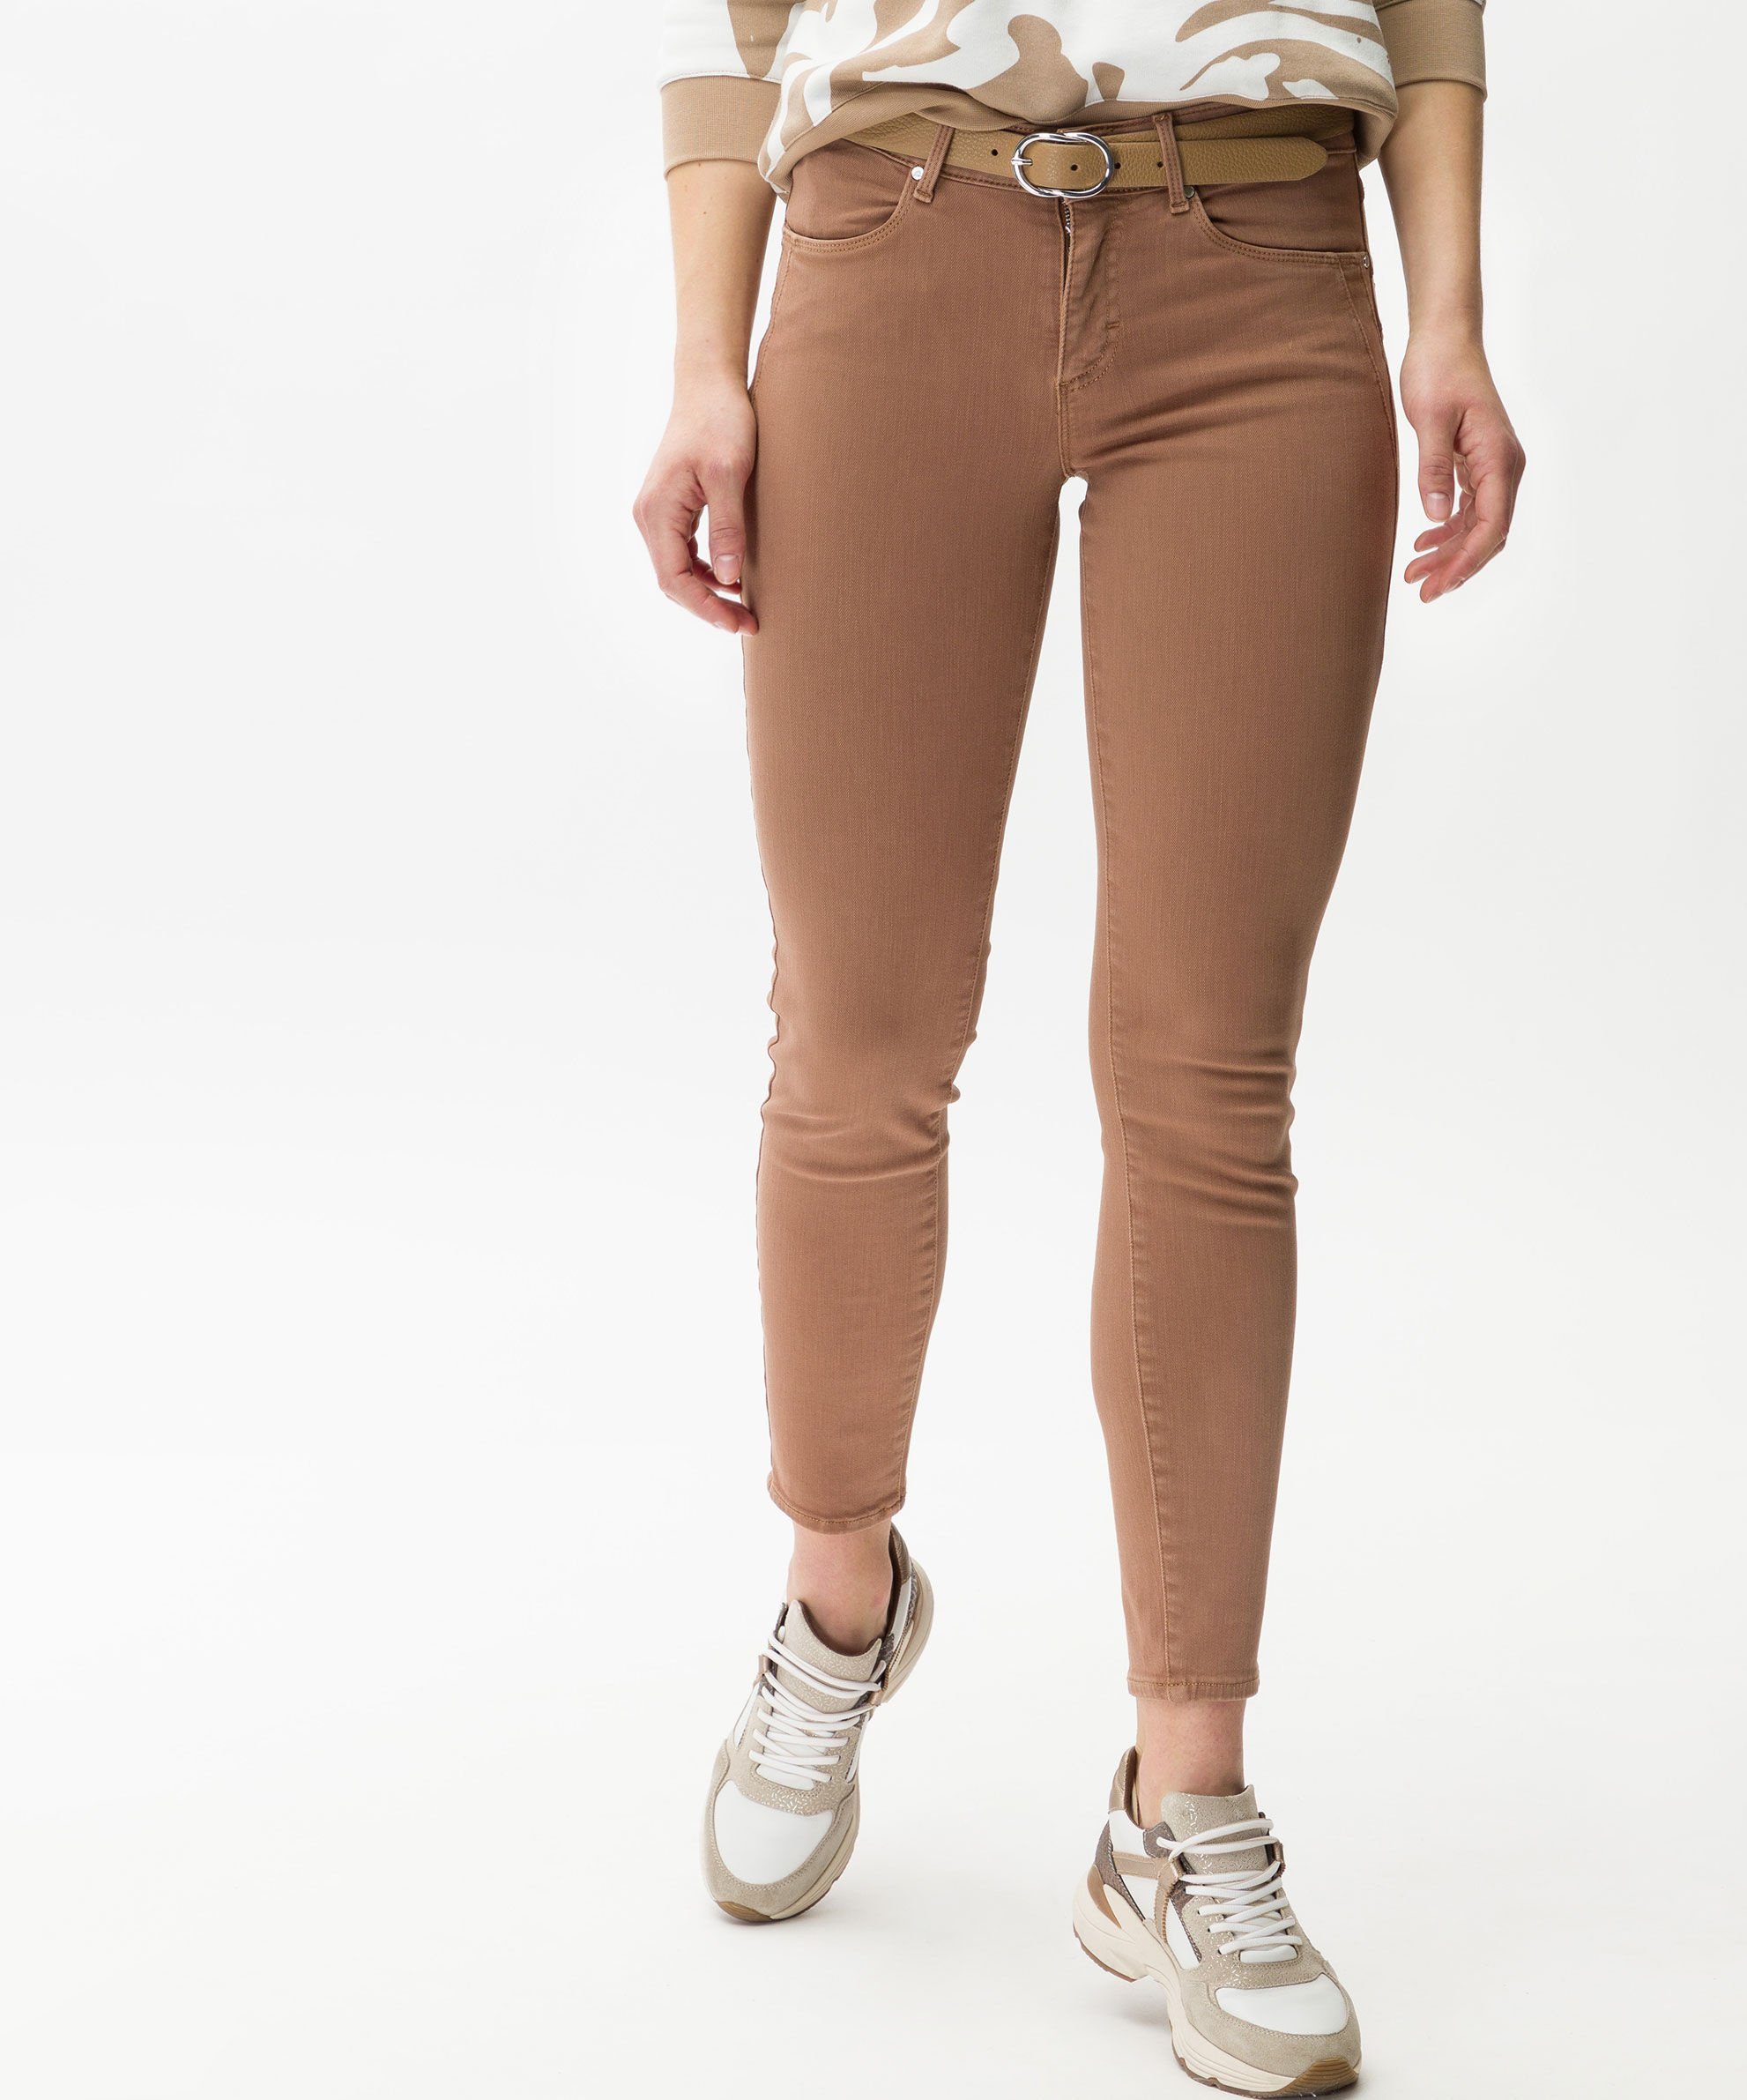 Röhrenjeans oak Skinny-fit-Jeans Brax Stylingdetails mit trendigen